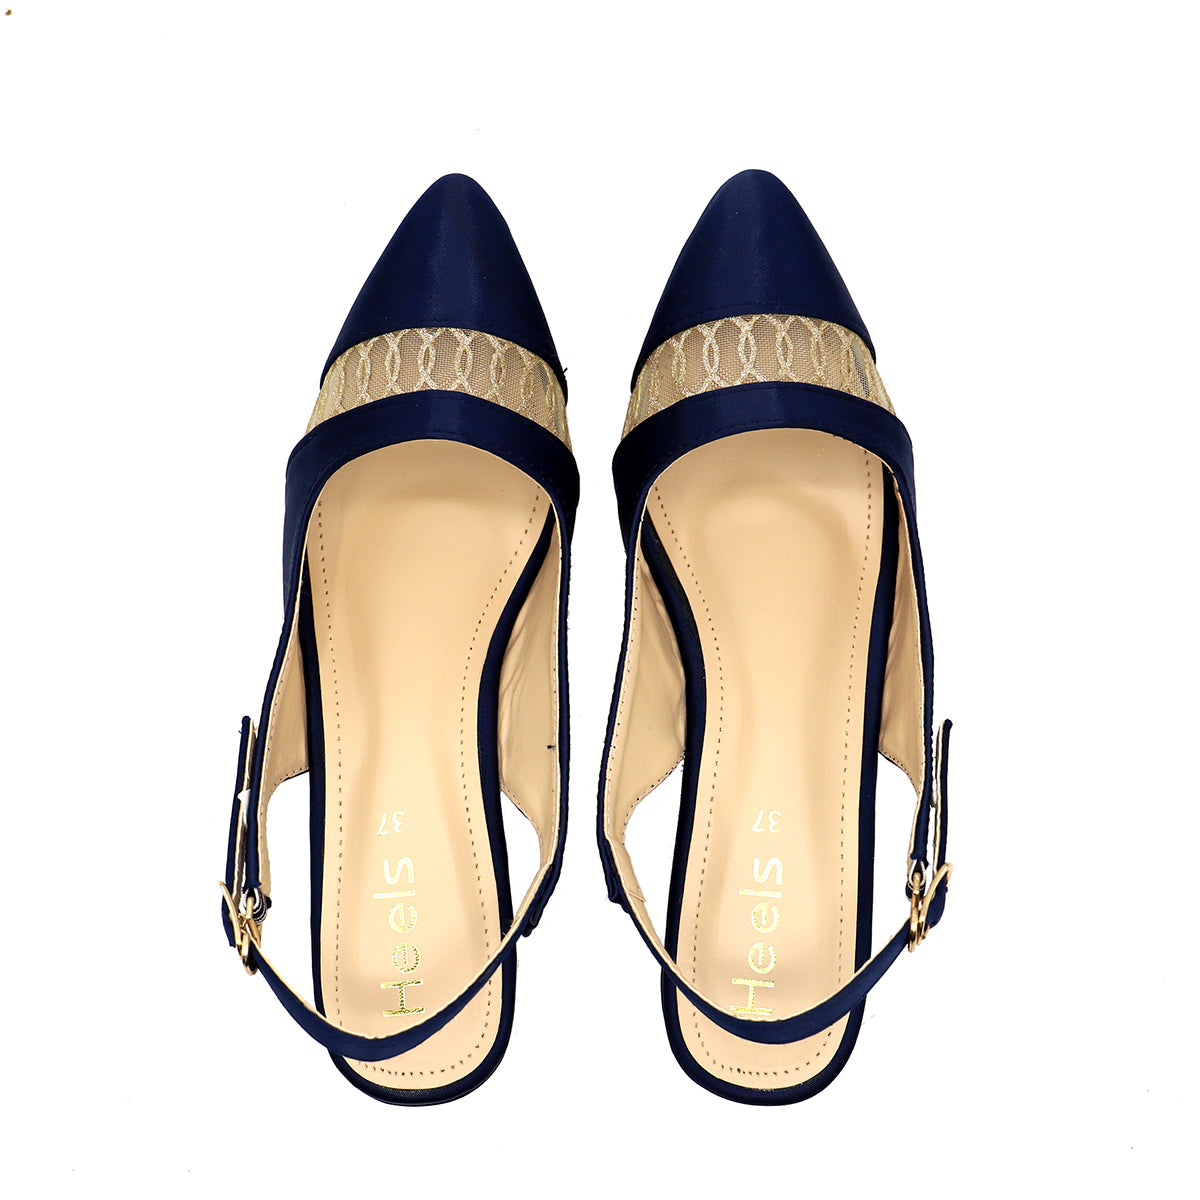 Blue Formal Court Shoes 085439